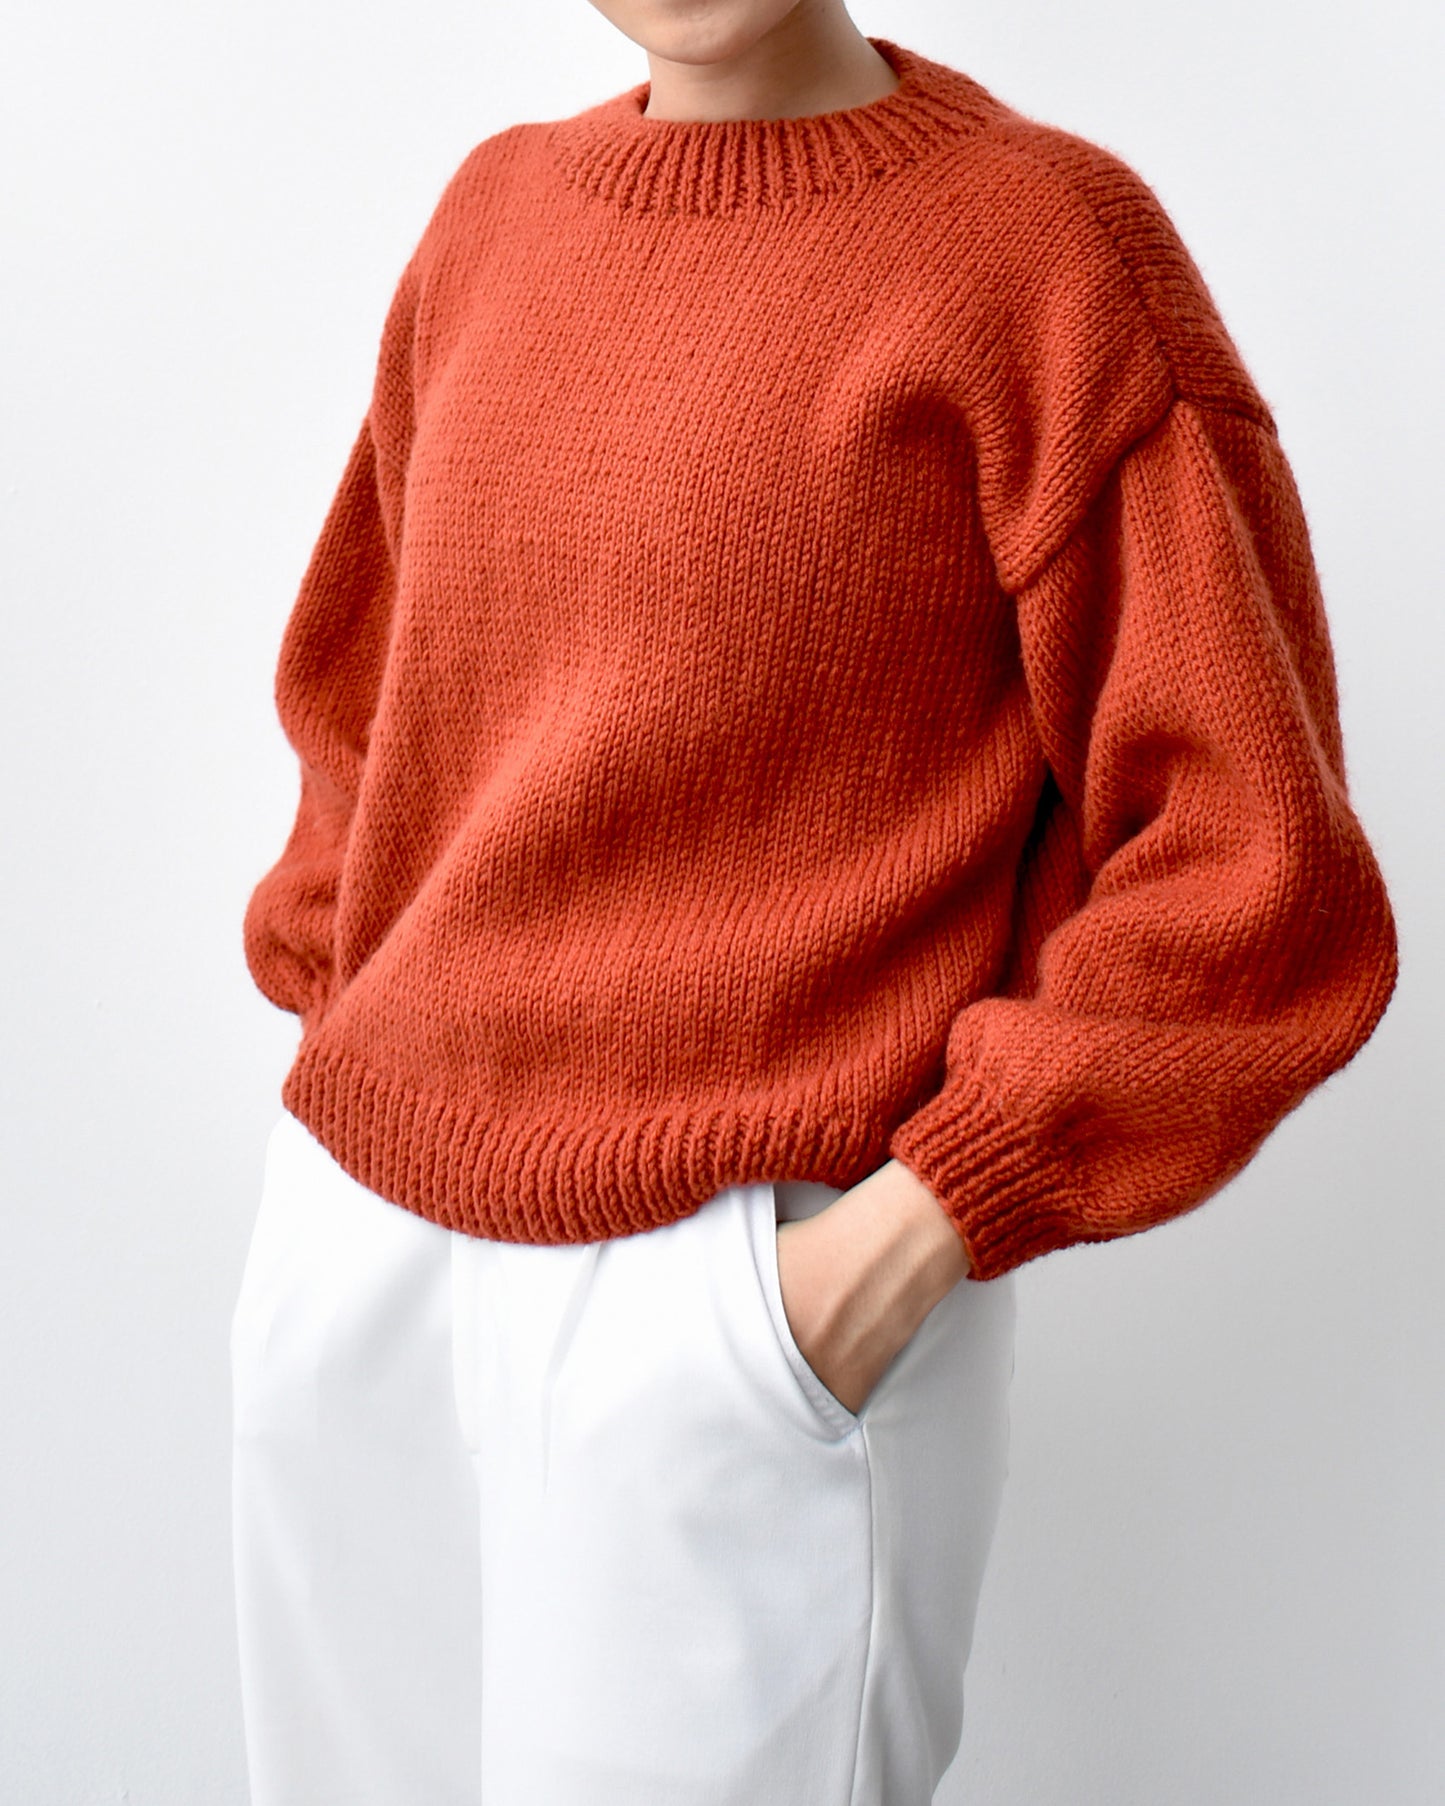 Sweater No.2 | Easy knitting sweater pattern